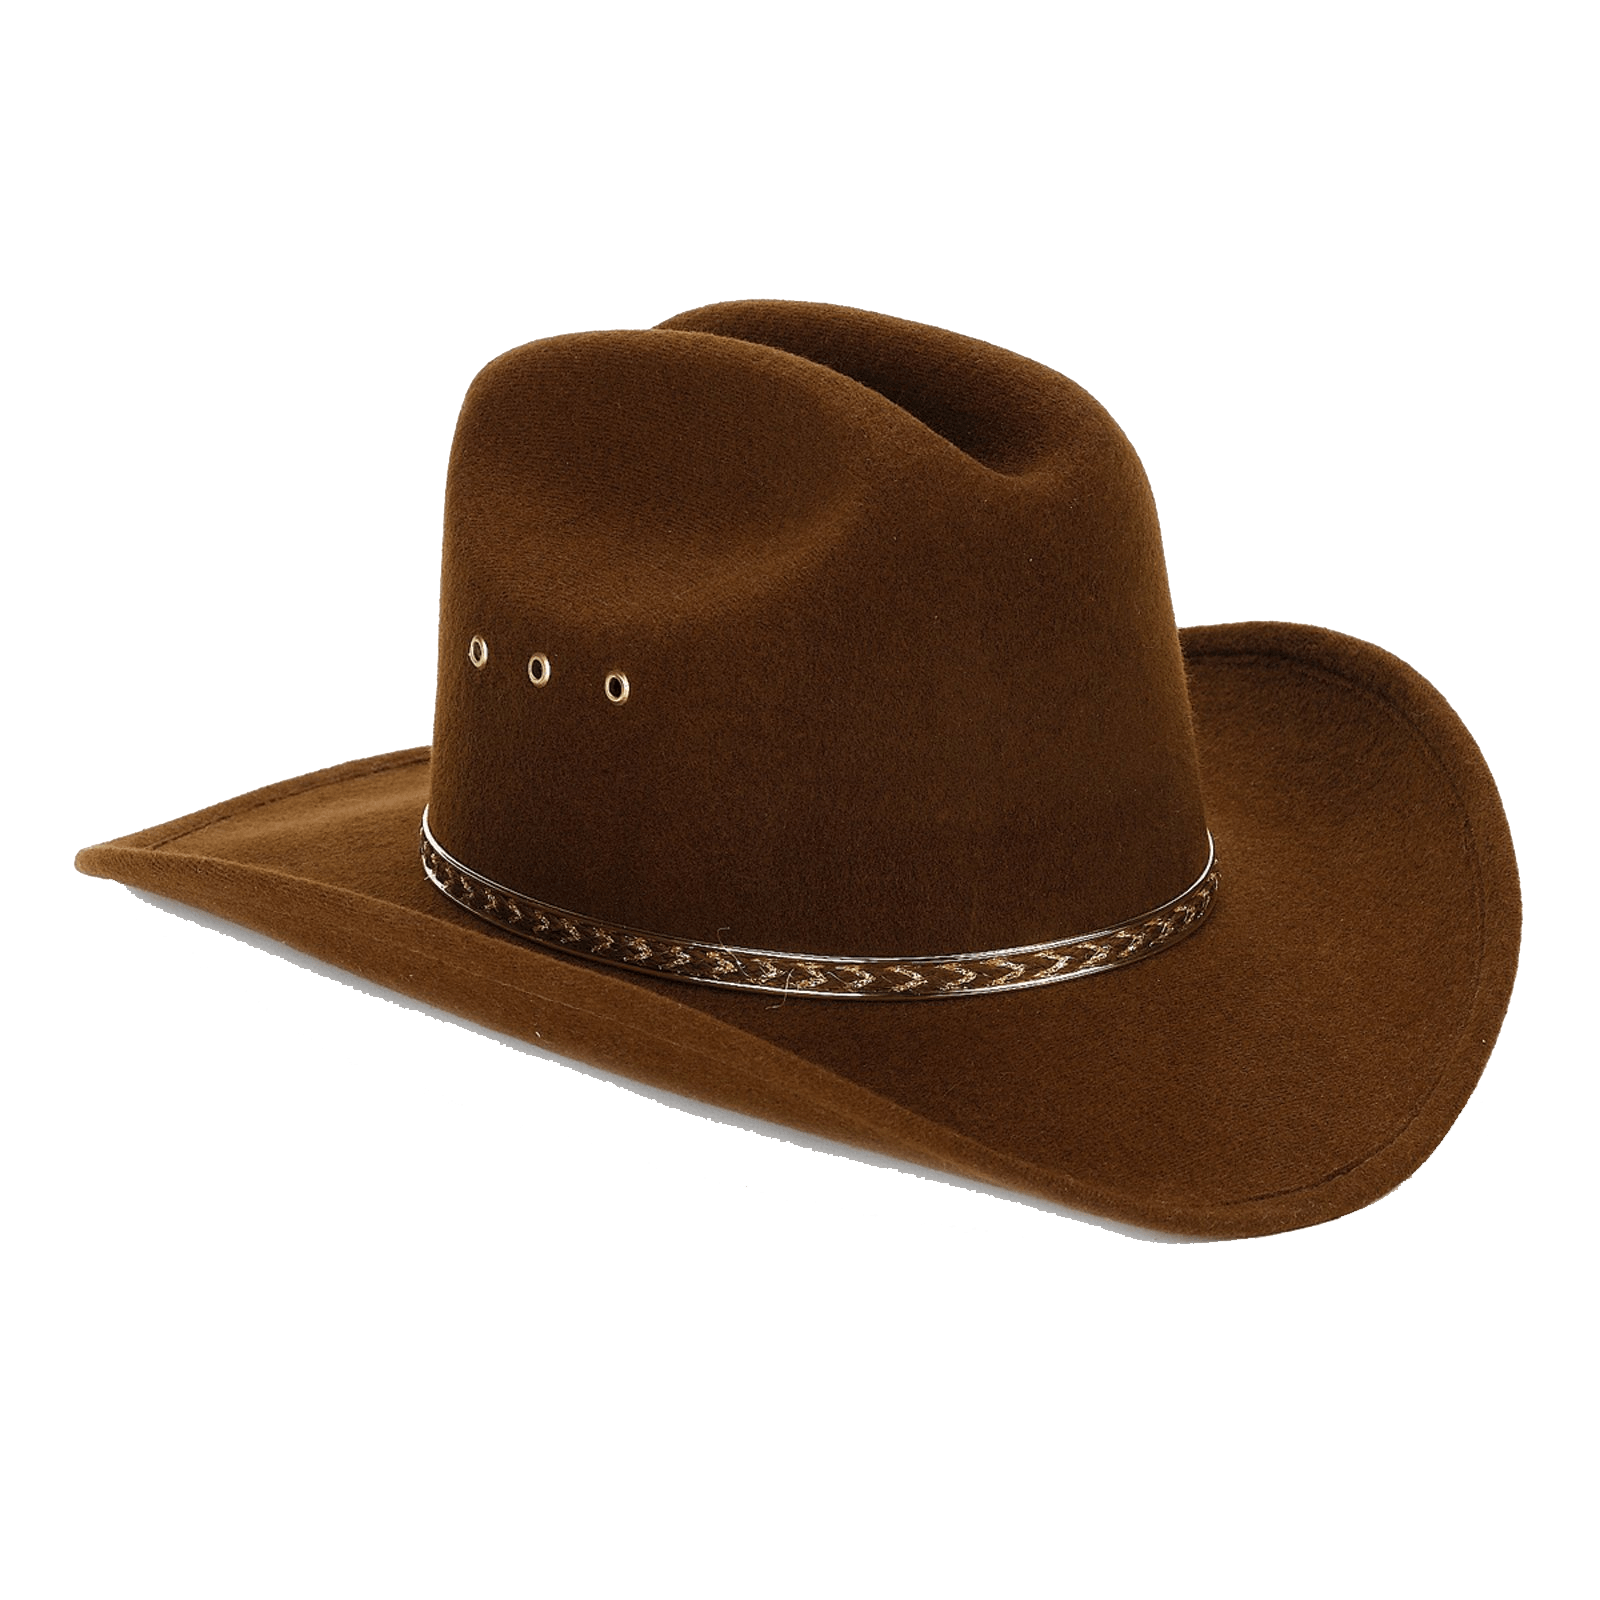 Imagen de PNG de sombrero de vaquero marrónn de alta calidad